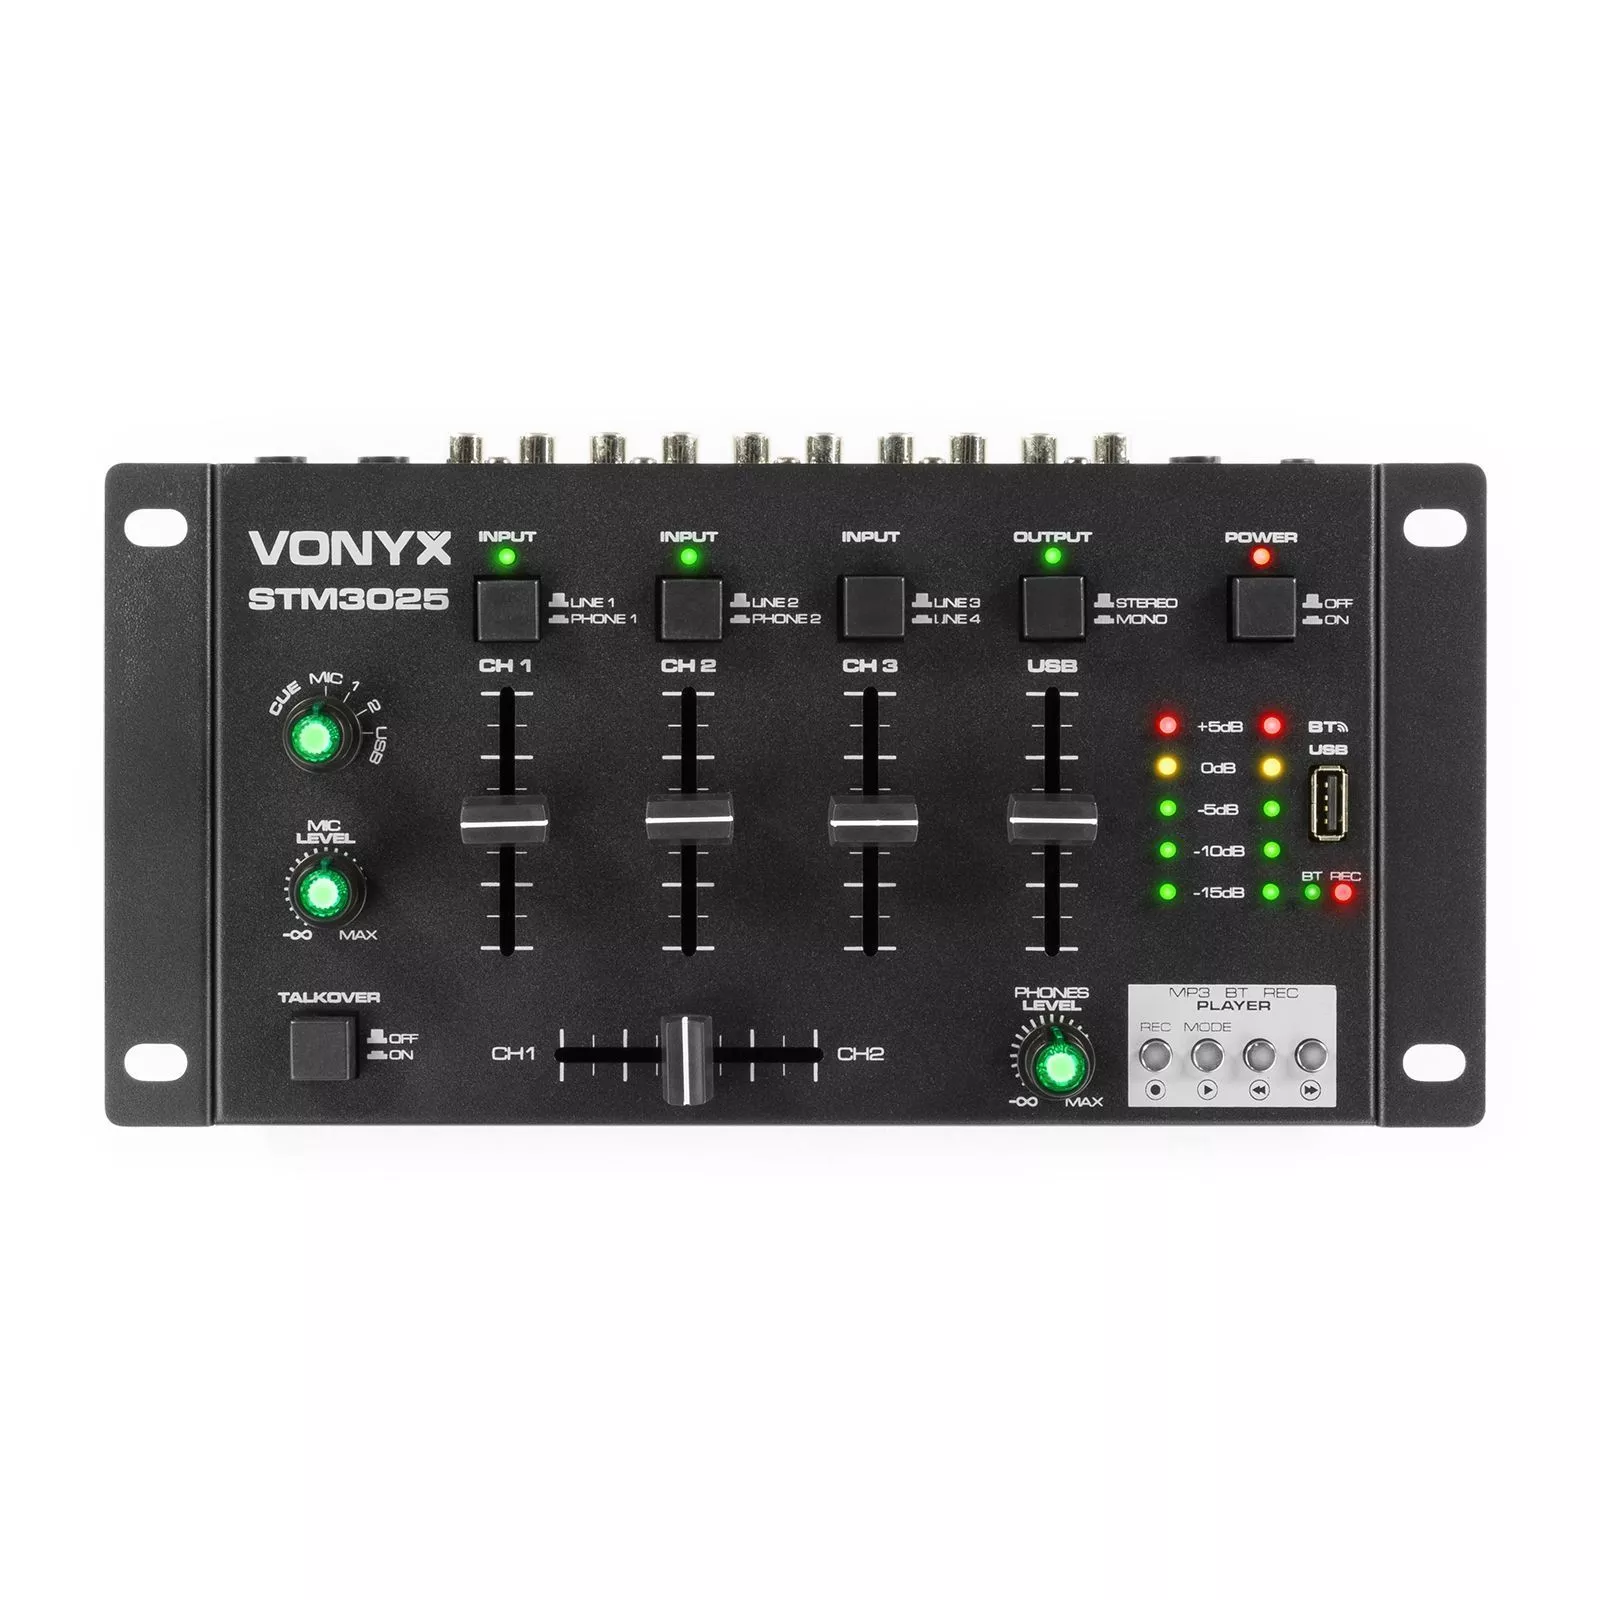 Retourdeal - Vonyx STM3025B mixer 4-kanaals met Bluetooth en USB mp3